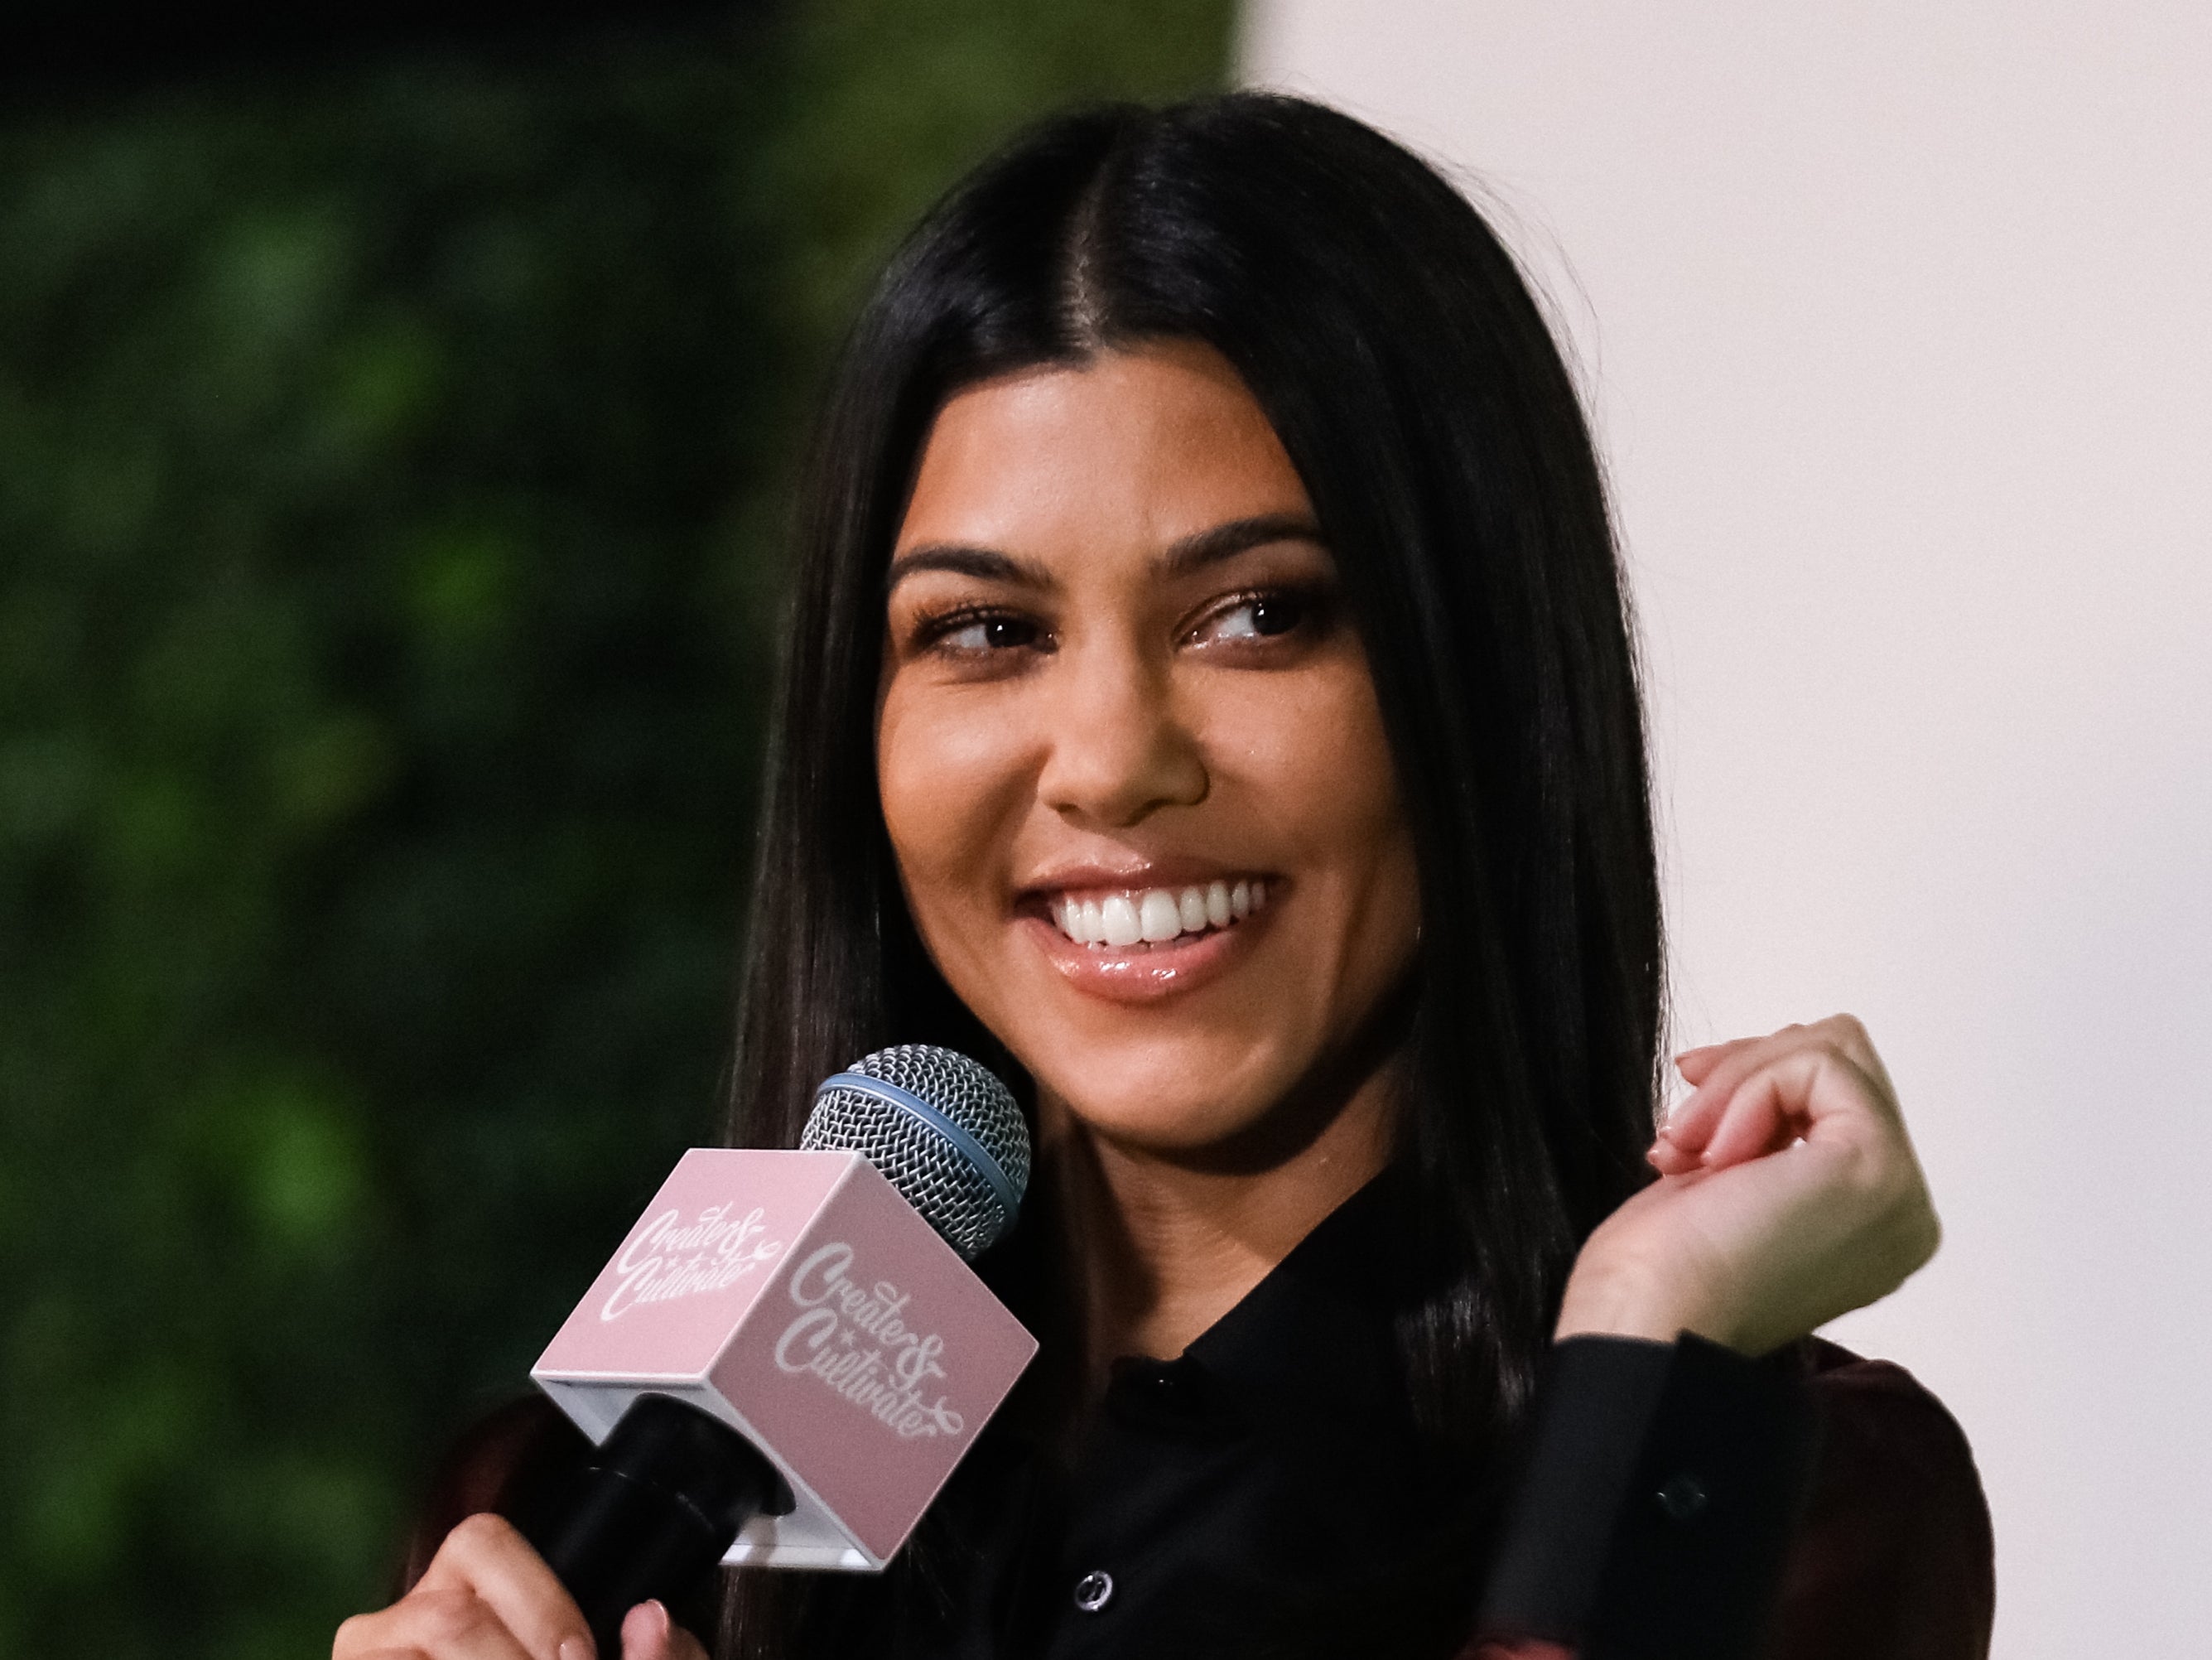 Reality star Kourtney Kardashian is a famous advocate of intermittent fasting